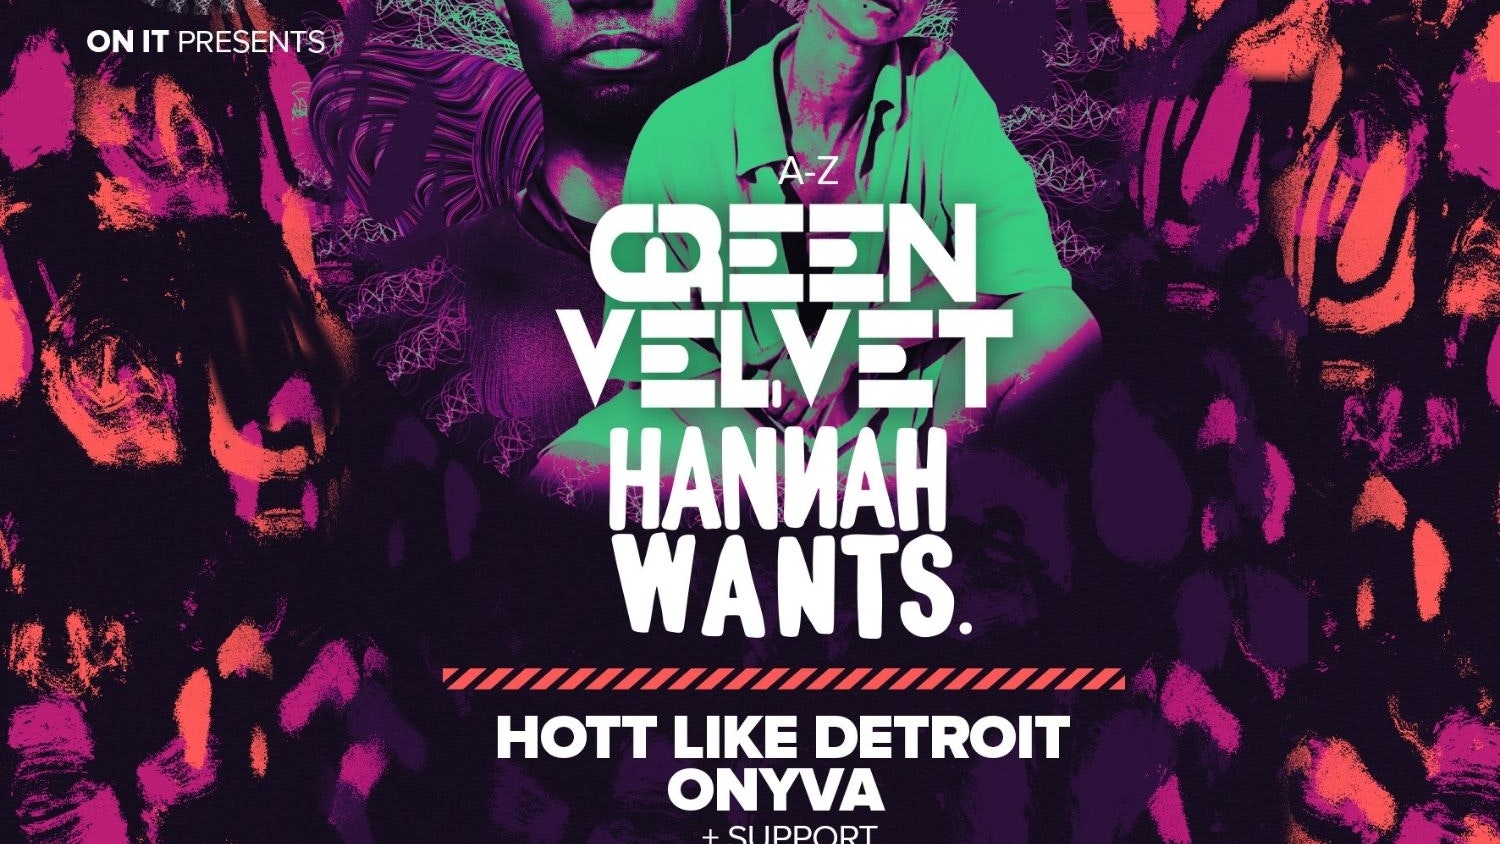 ON IT Presents Green Velvet & Hannah Wants @ The Hangar, Wolverhampton